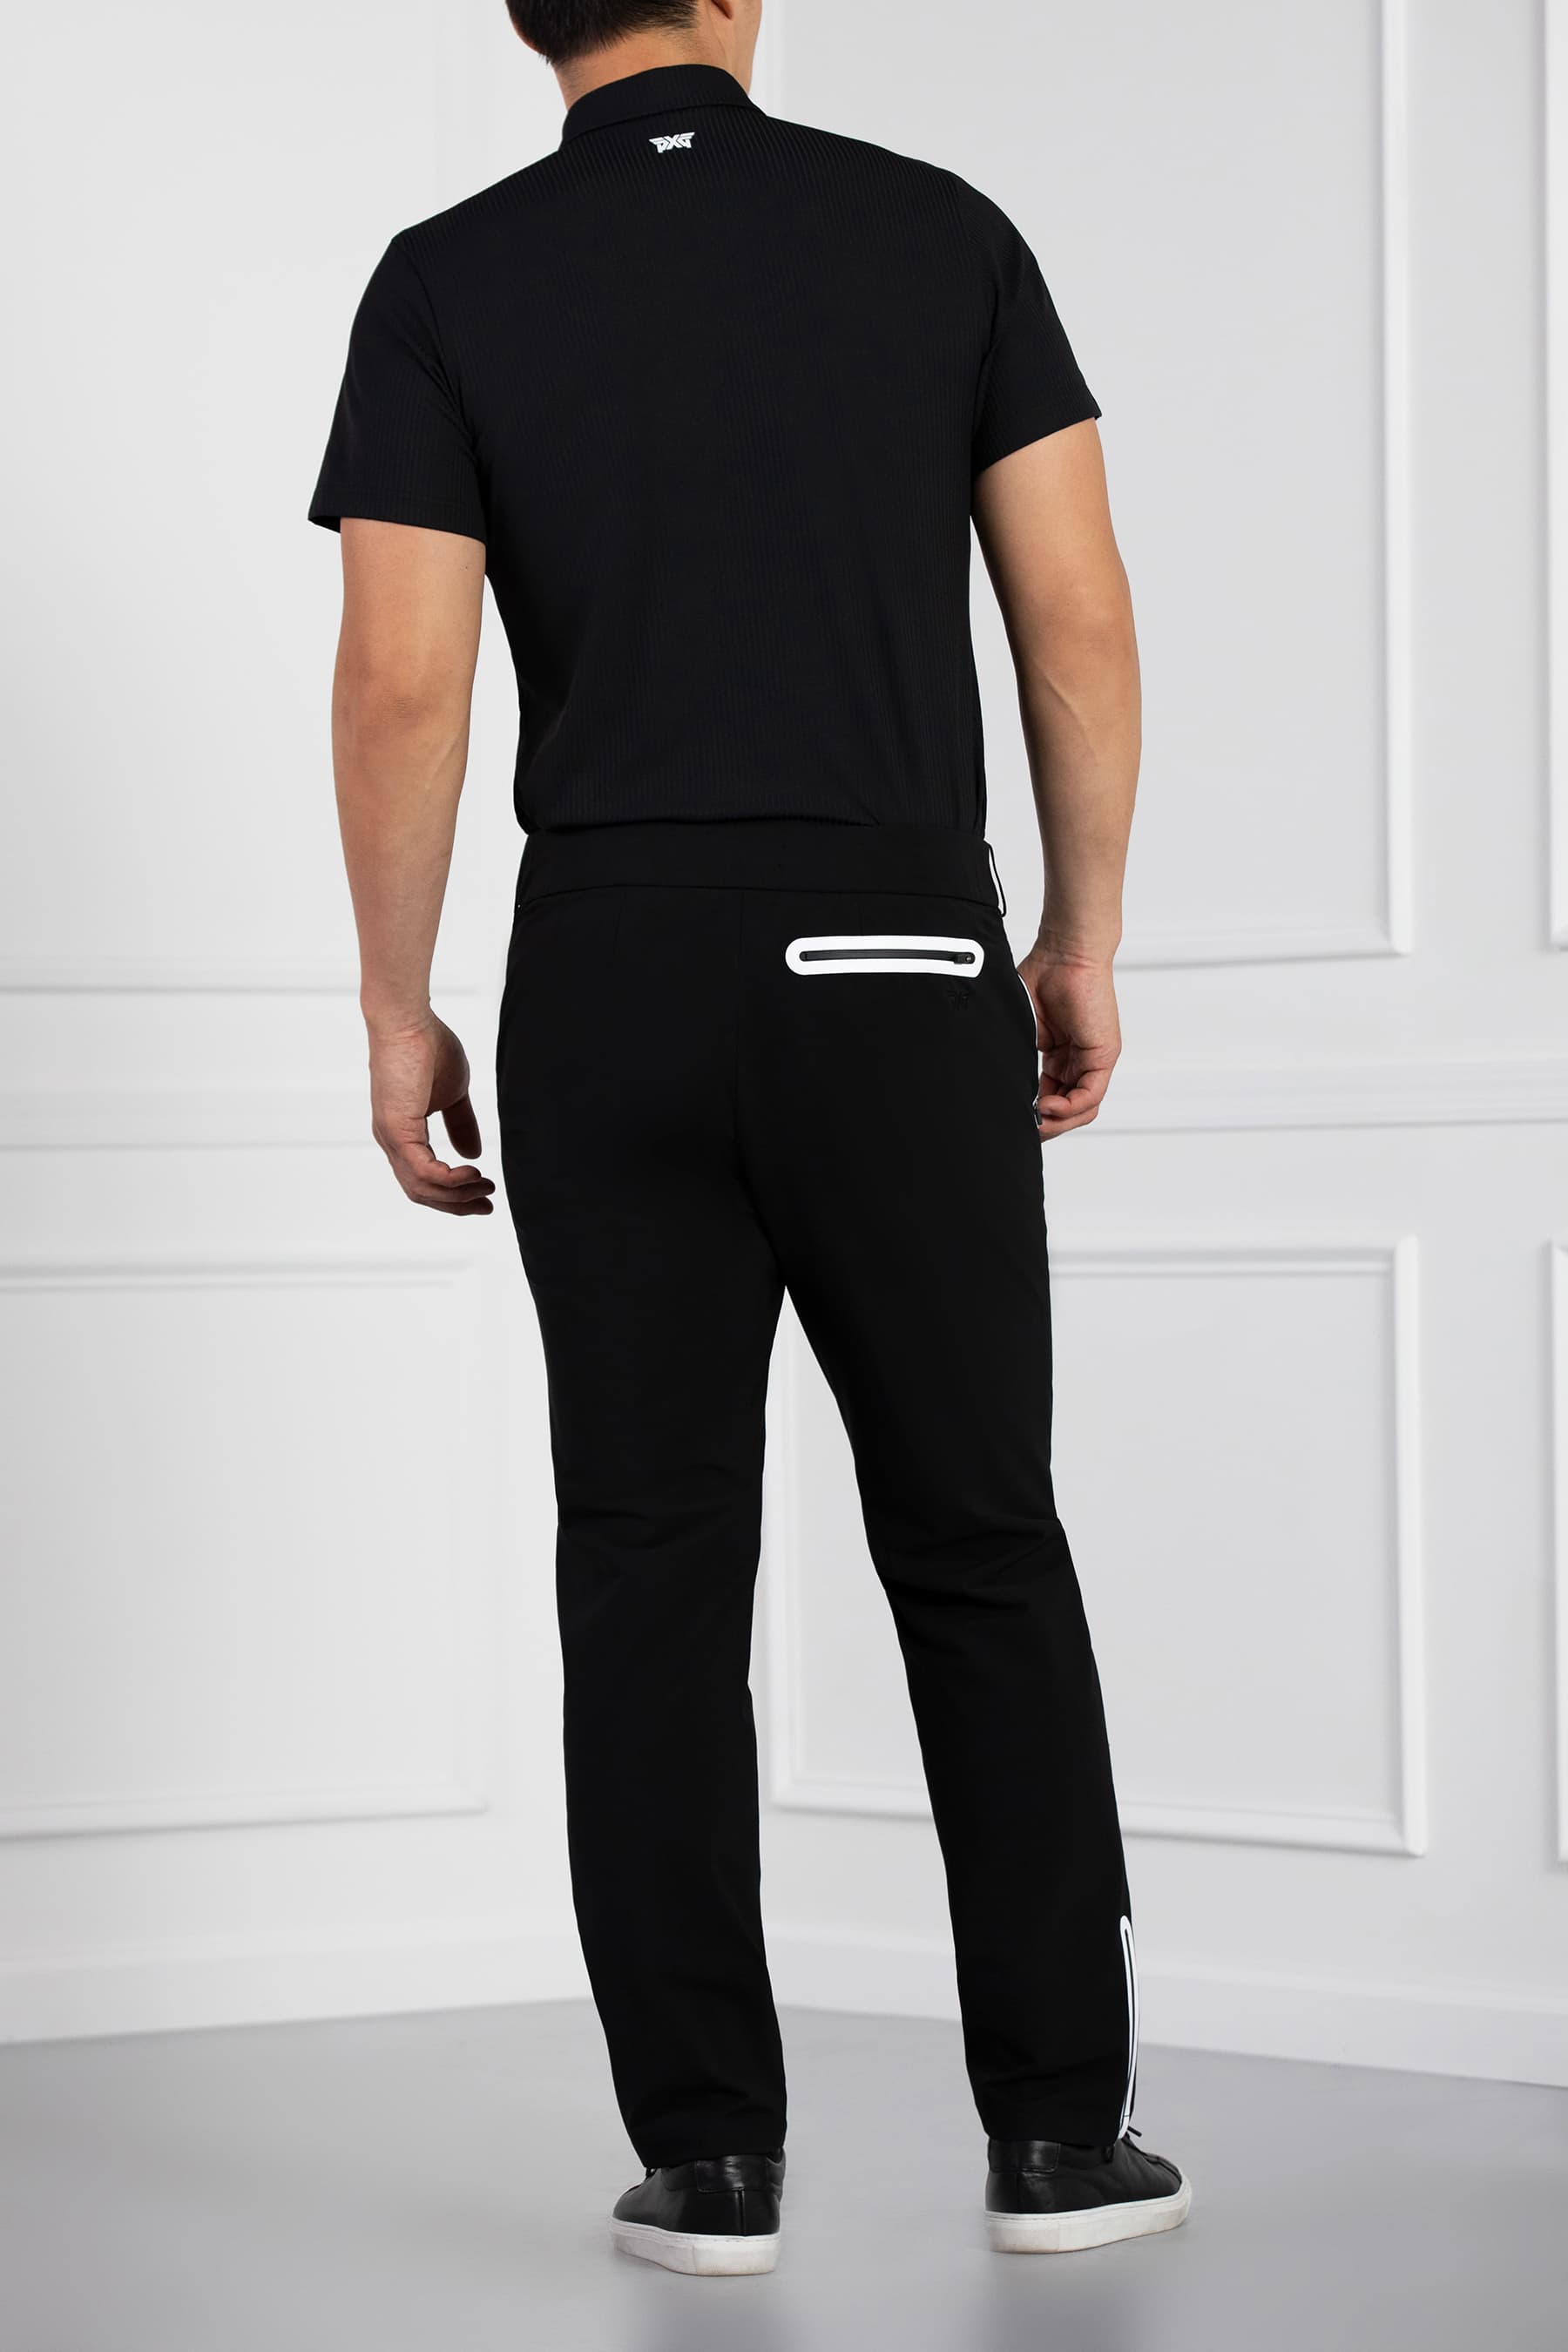 Versace Men's 2-Pack Essential Stretch T-shirts Black